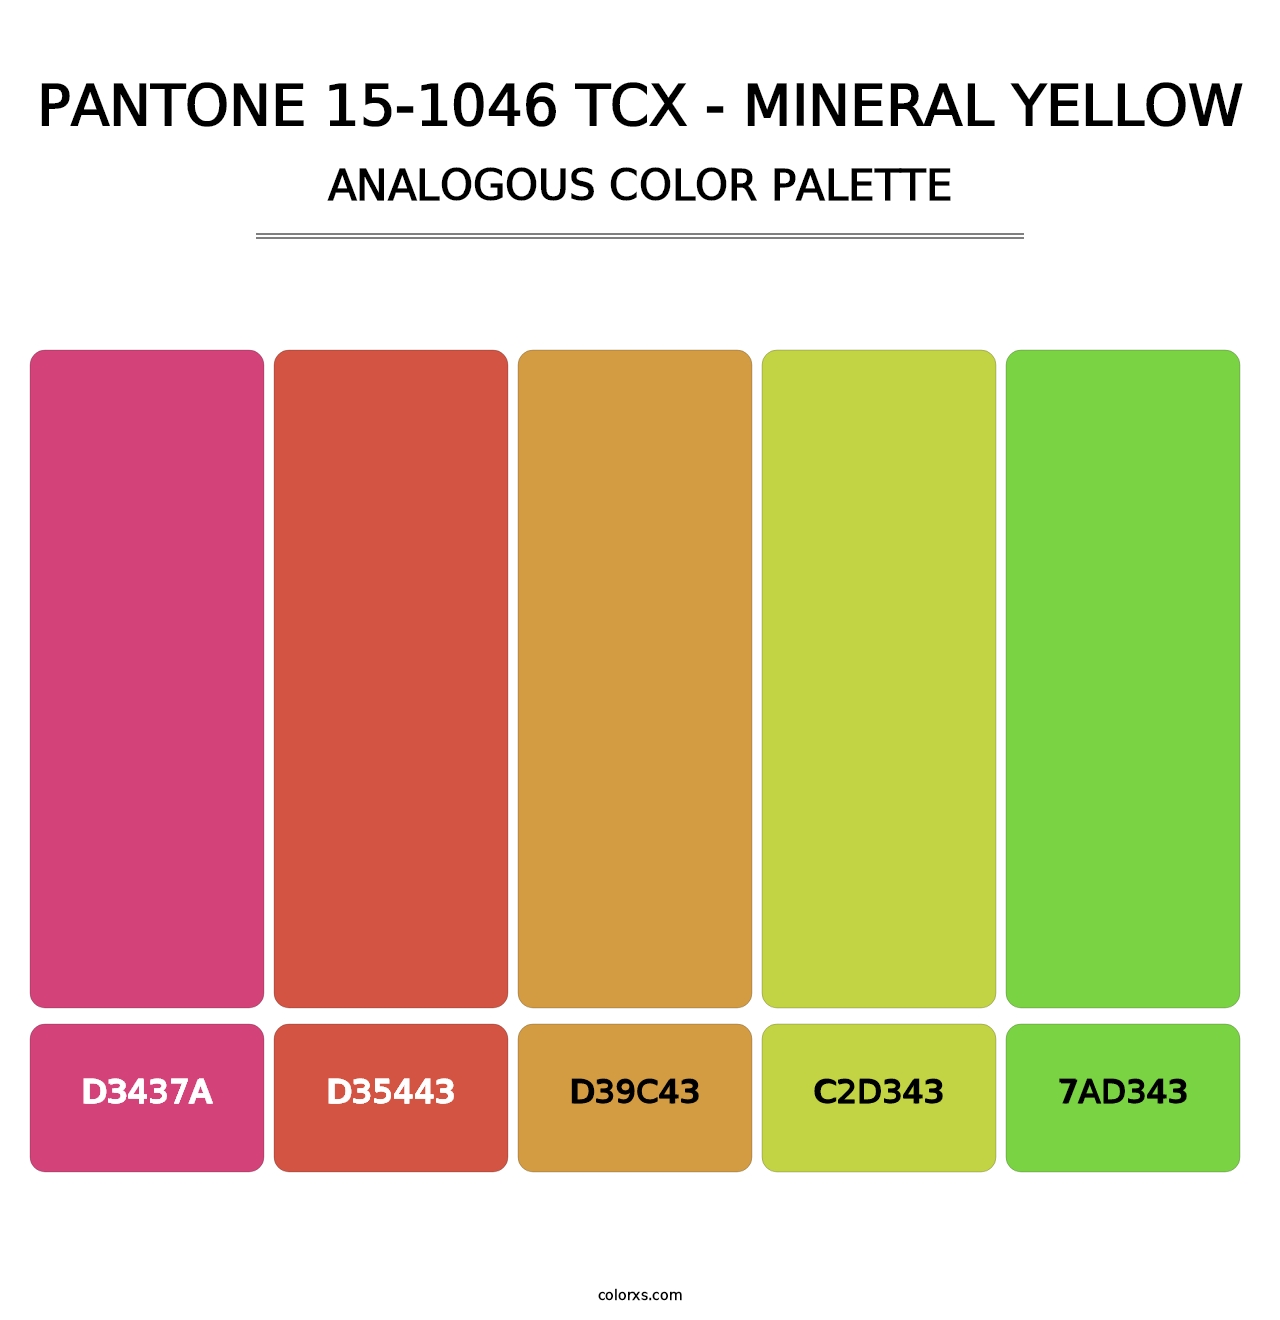 PANTONE 15-1046 TCX - Mineral Yellow - Analogous Color Palette